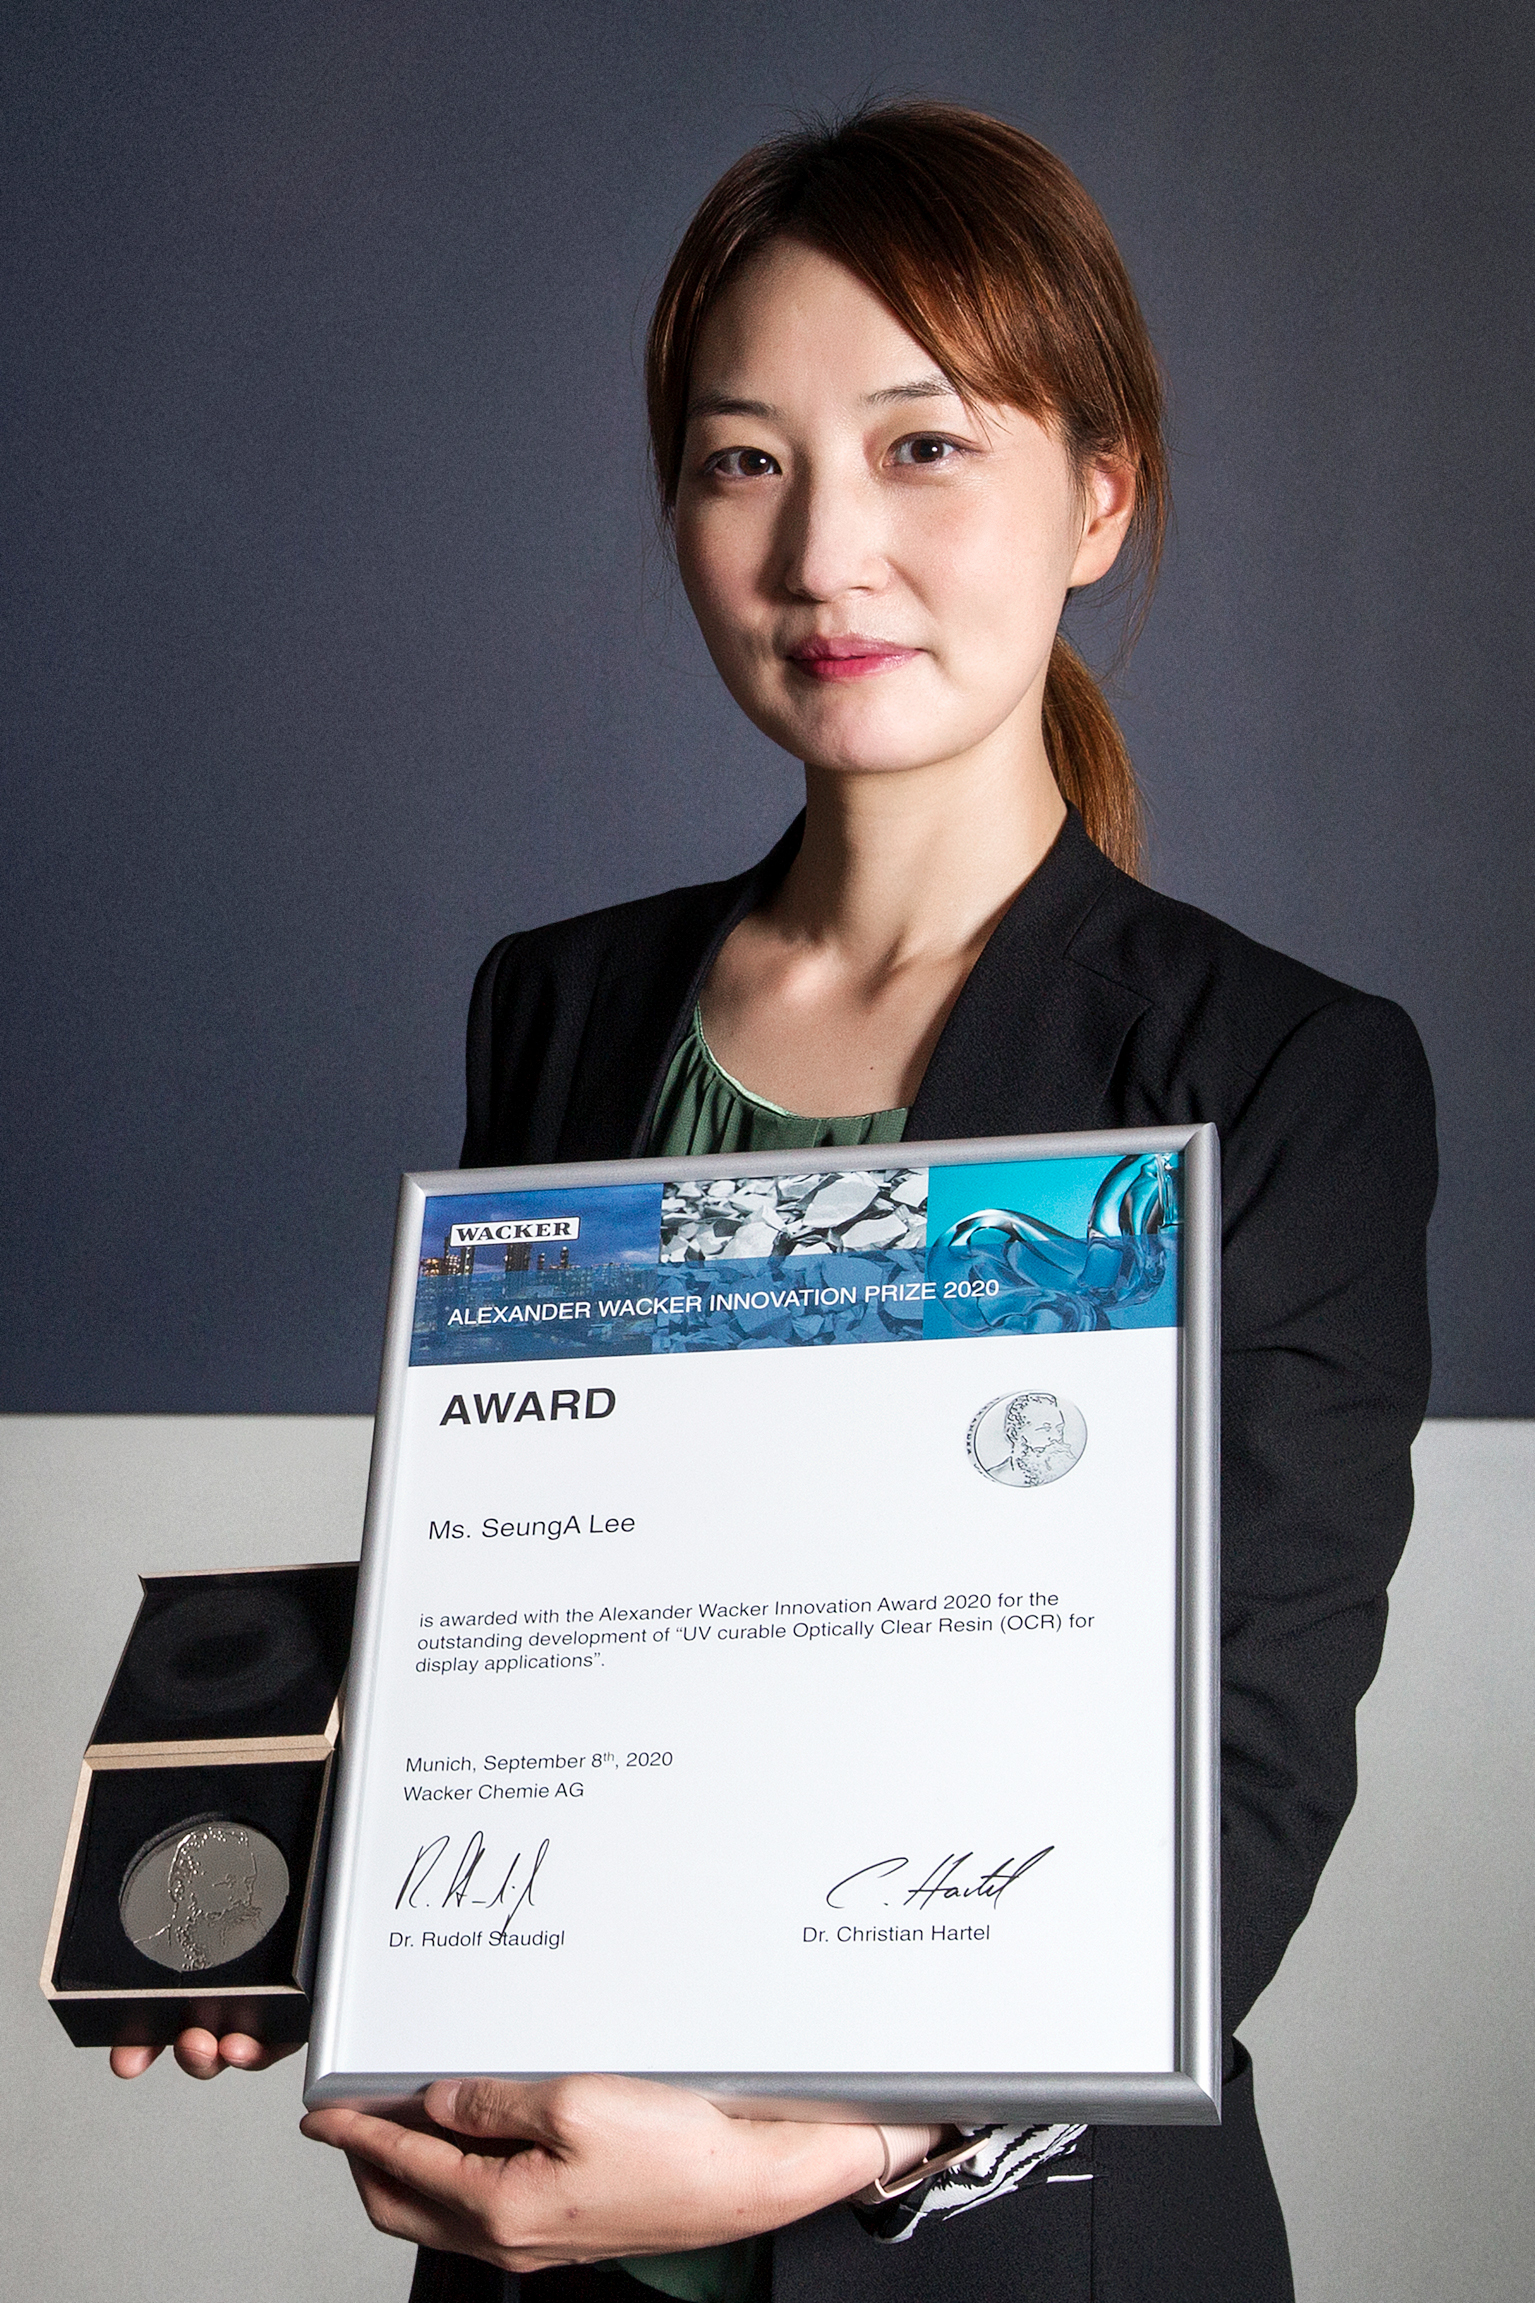 SeungA Lee received the Alexander Wacker Innovation Award